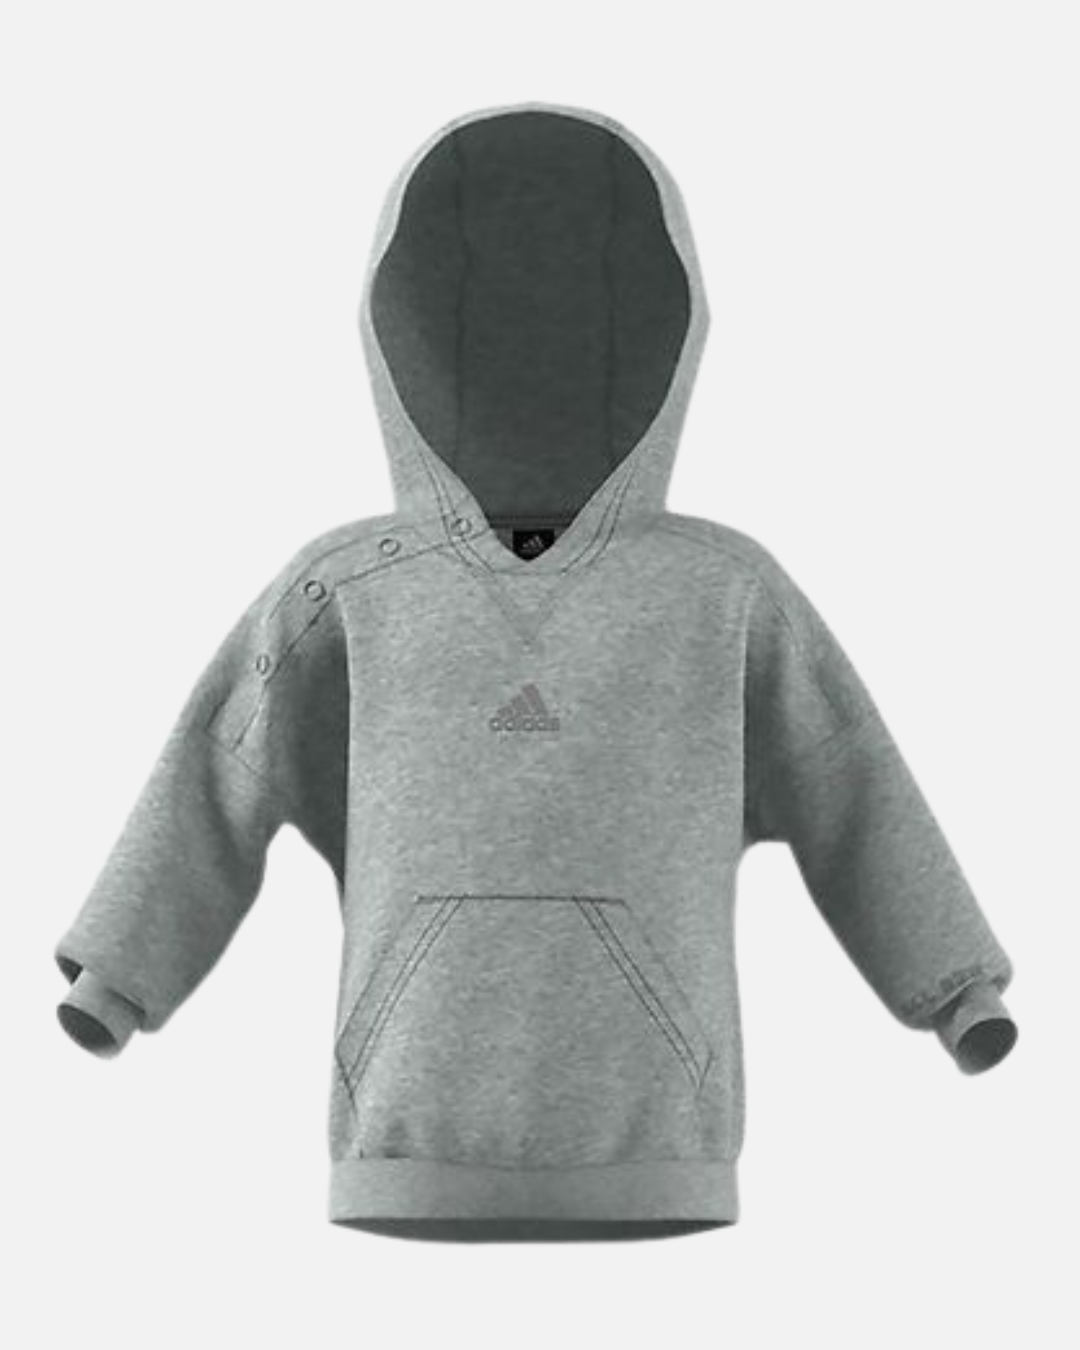 Adidas Baby Tracksuit Set - Gray